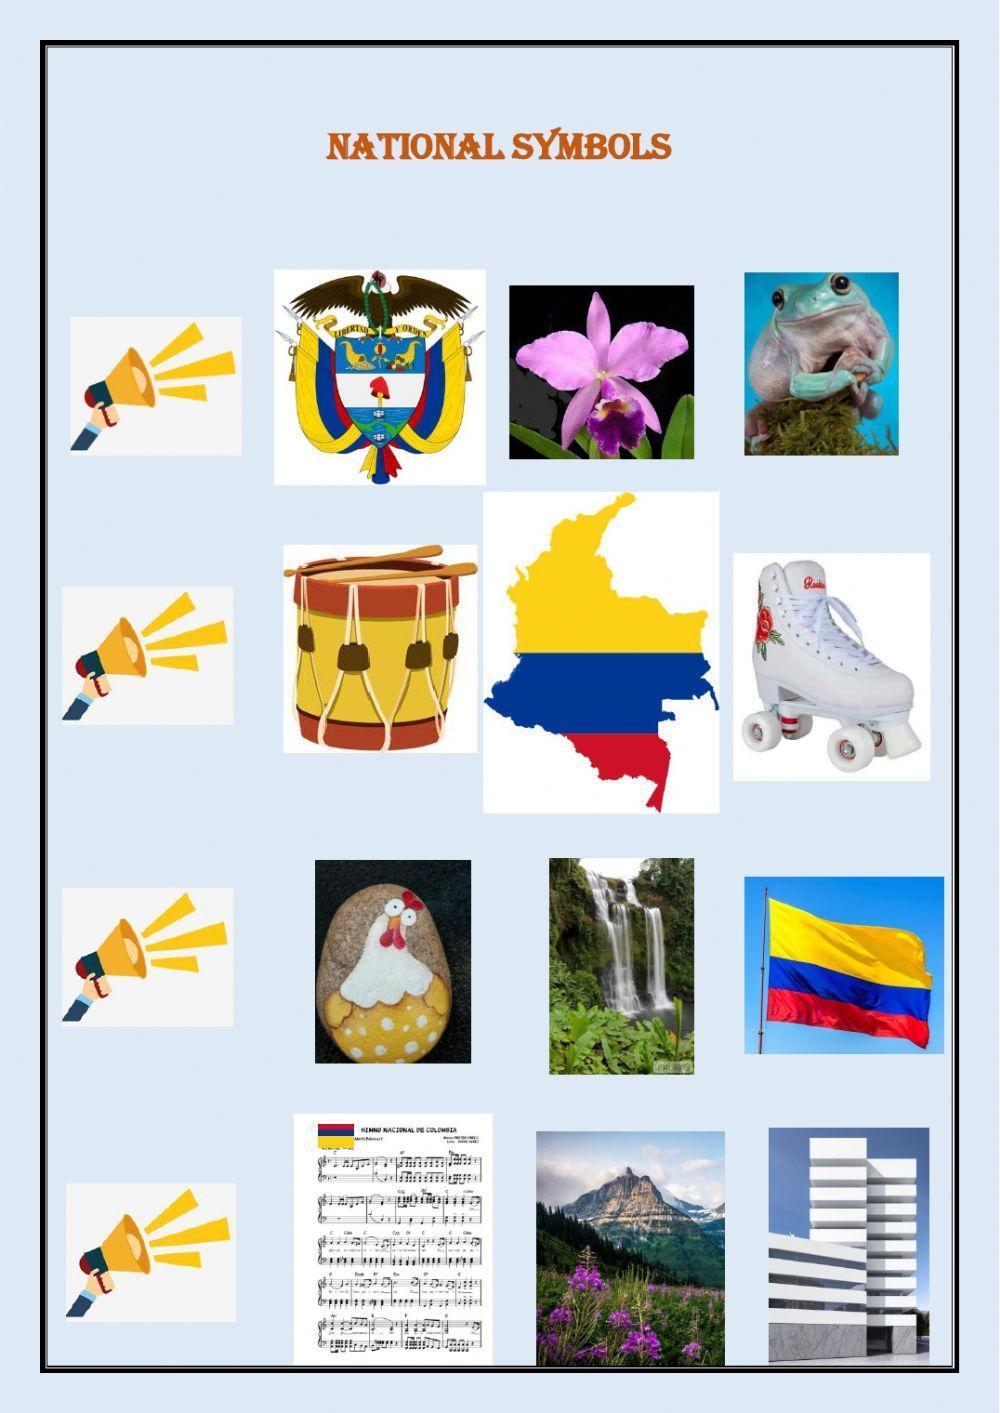 Colombian National symbols